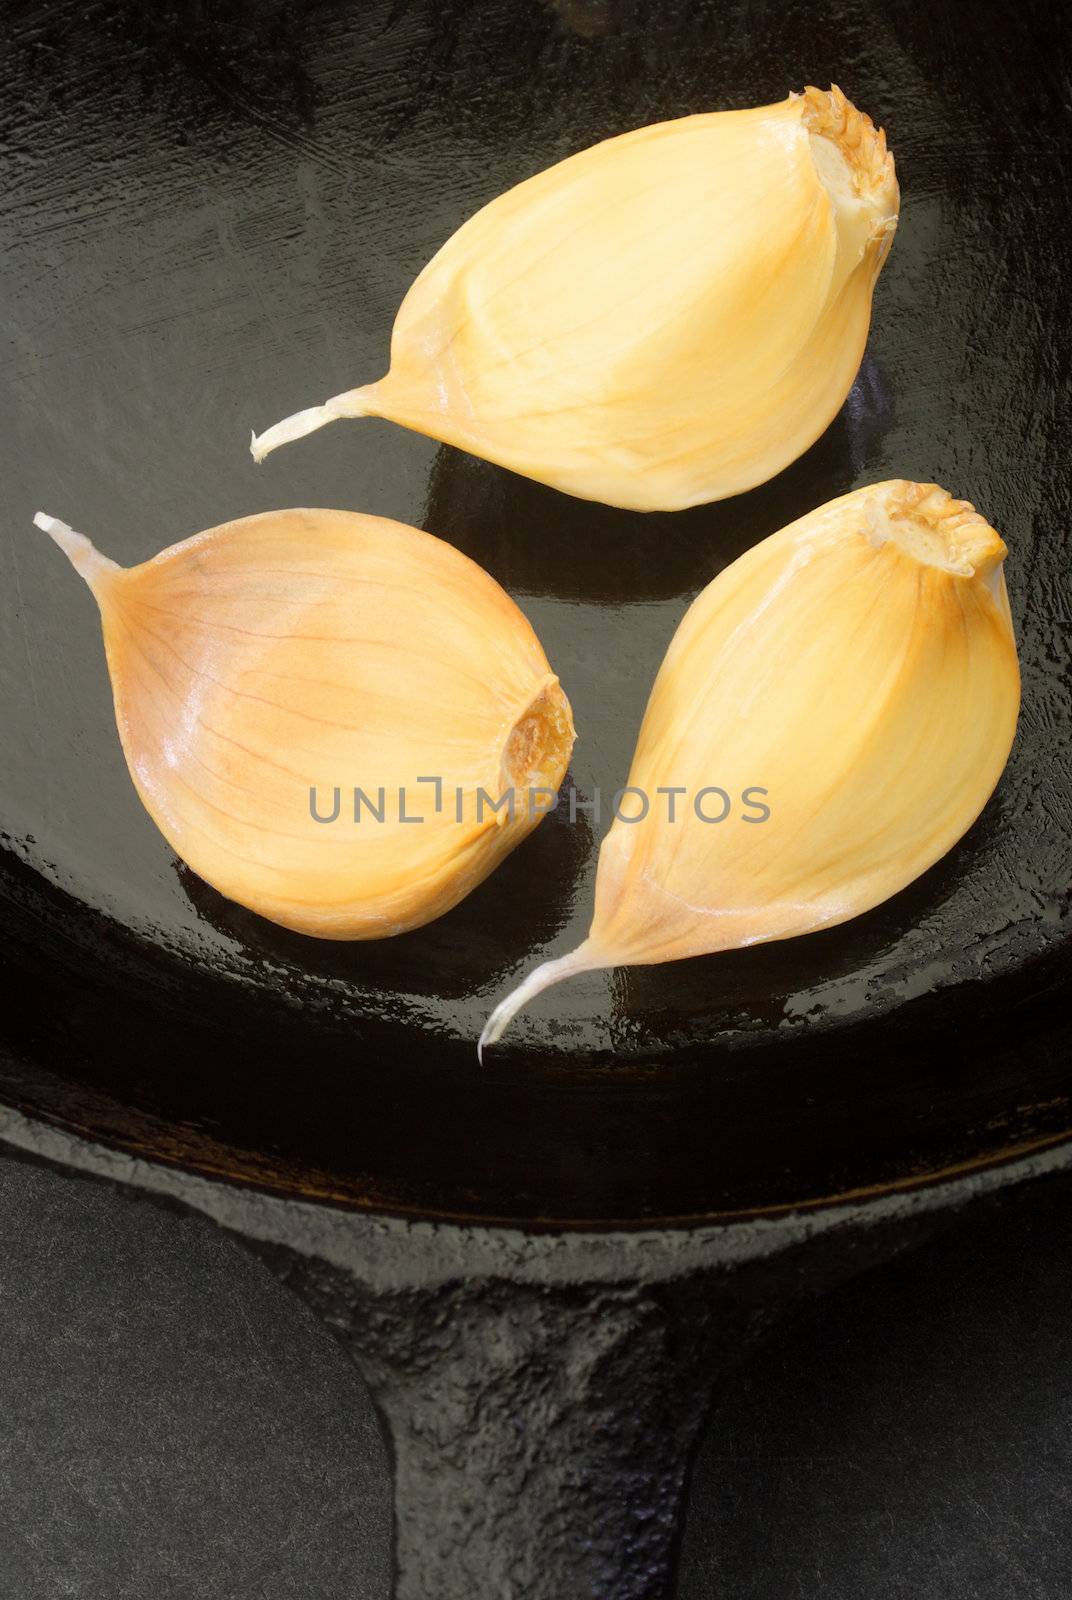 Cloves of garlic by carterphoto